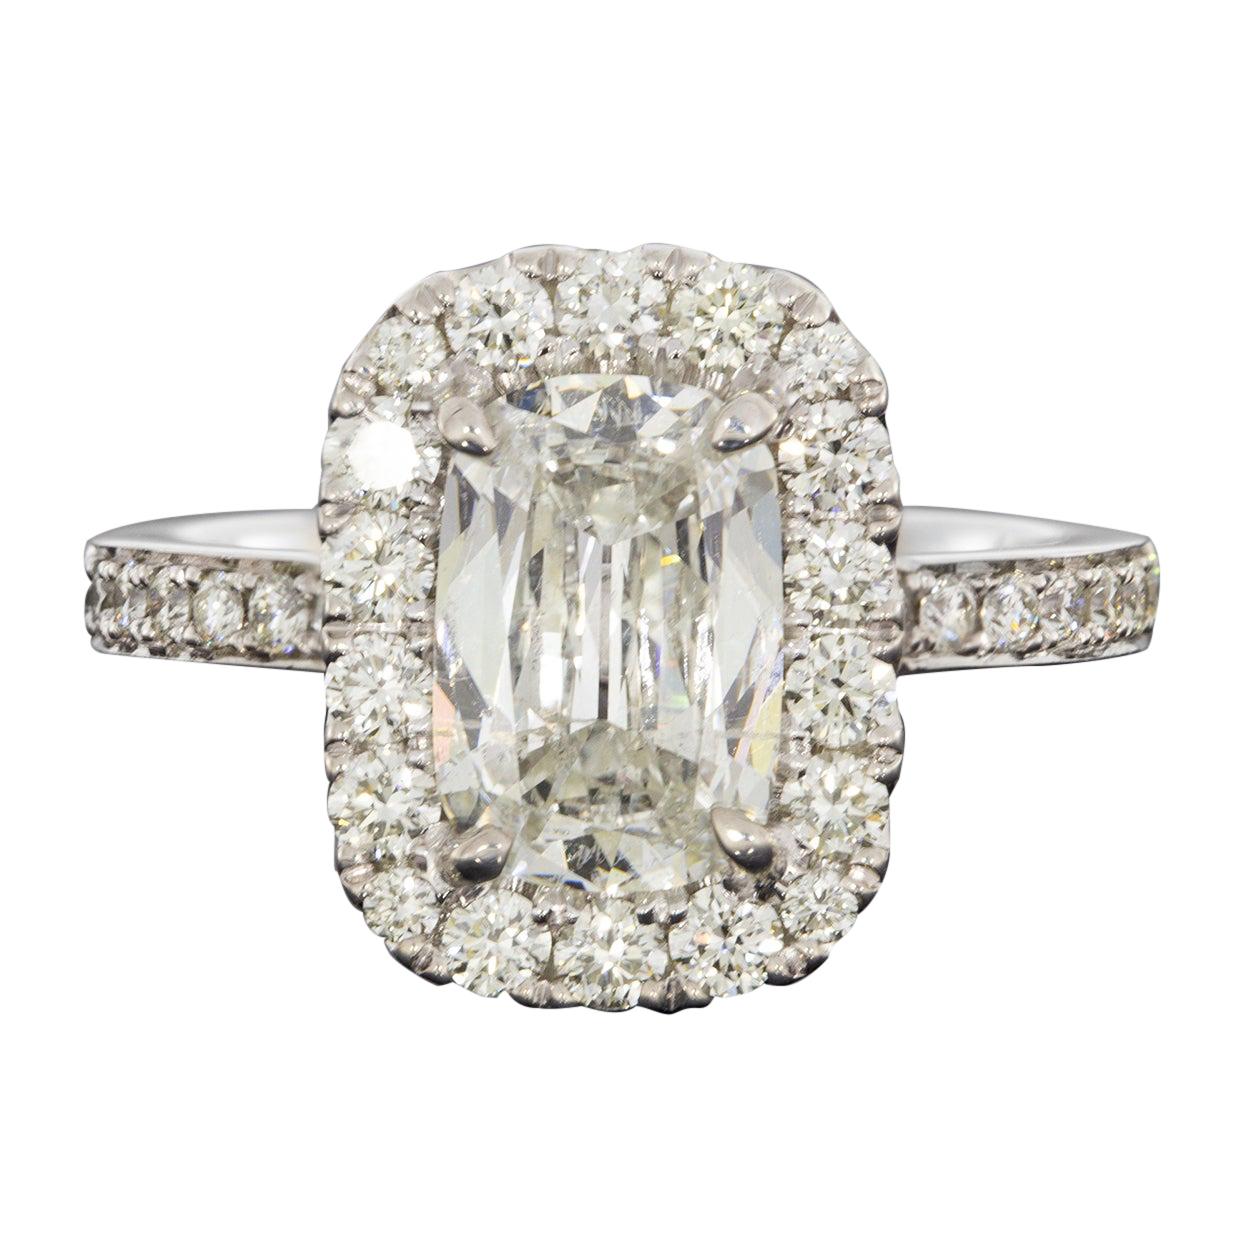 White Gold 2.59 carat Cushion Diamond Halo Engagement Ring